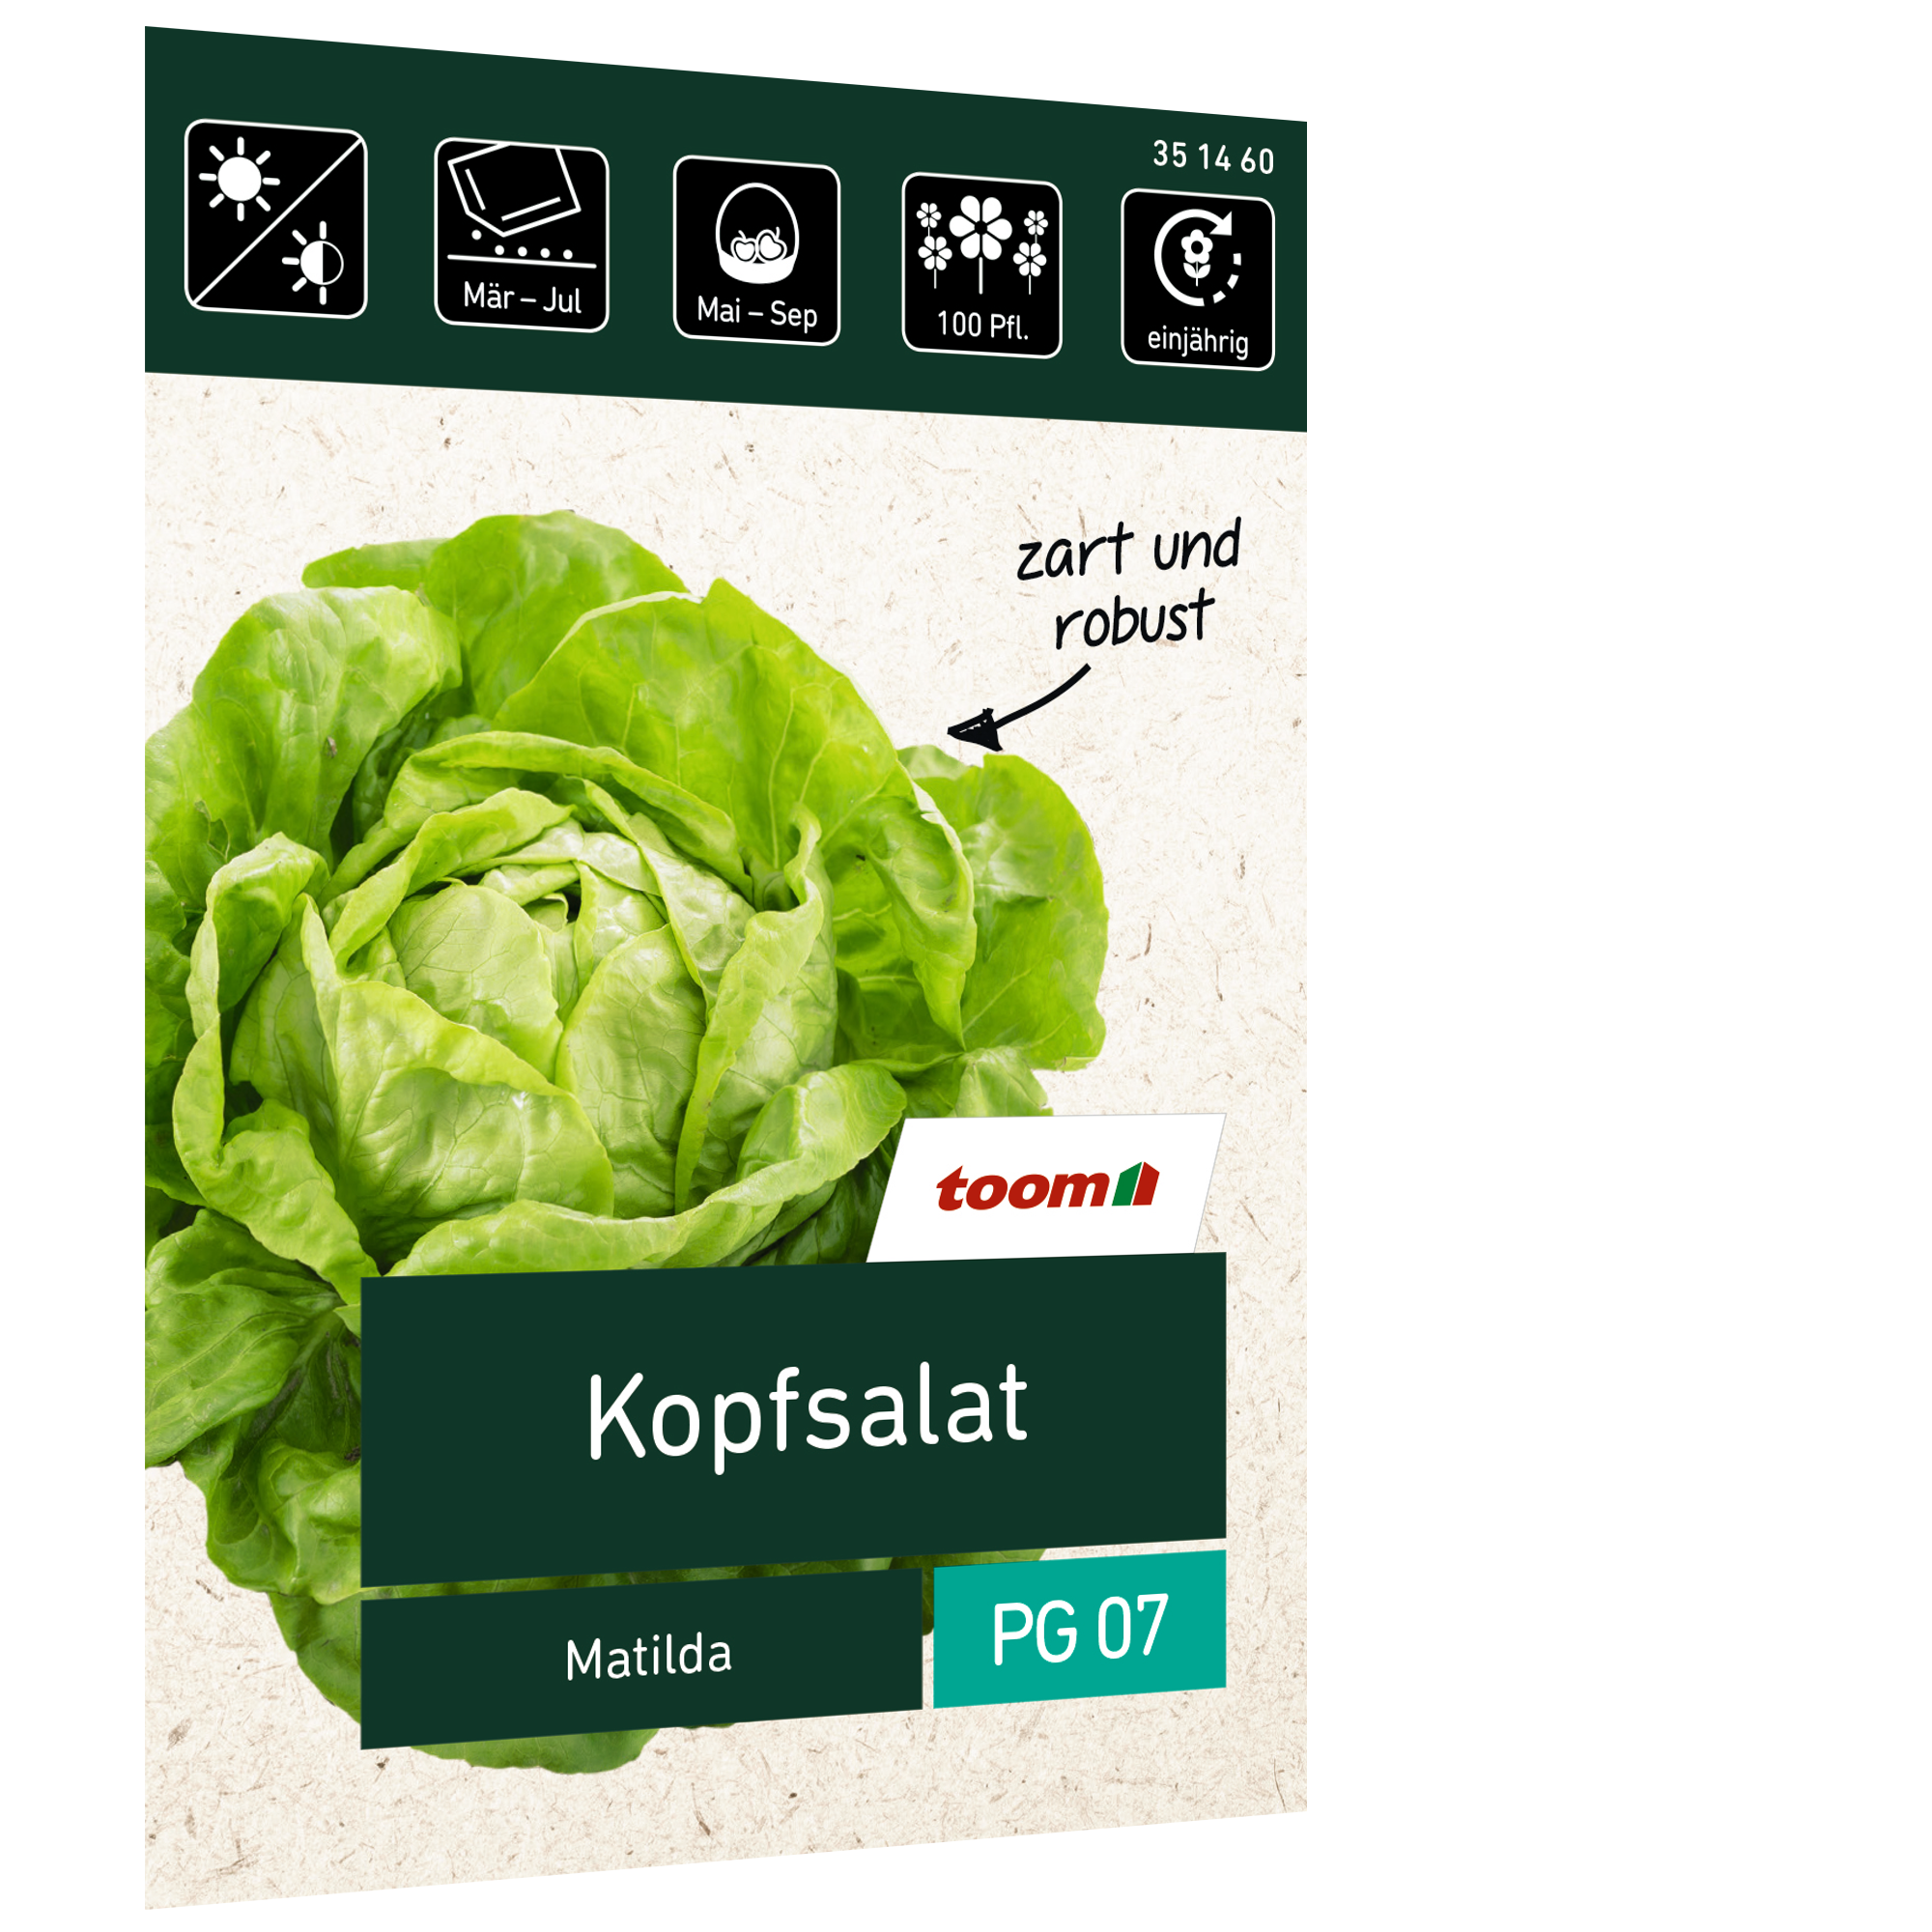 Kopfsalat 'Matilda' + product picture